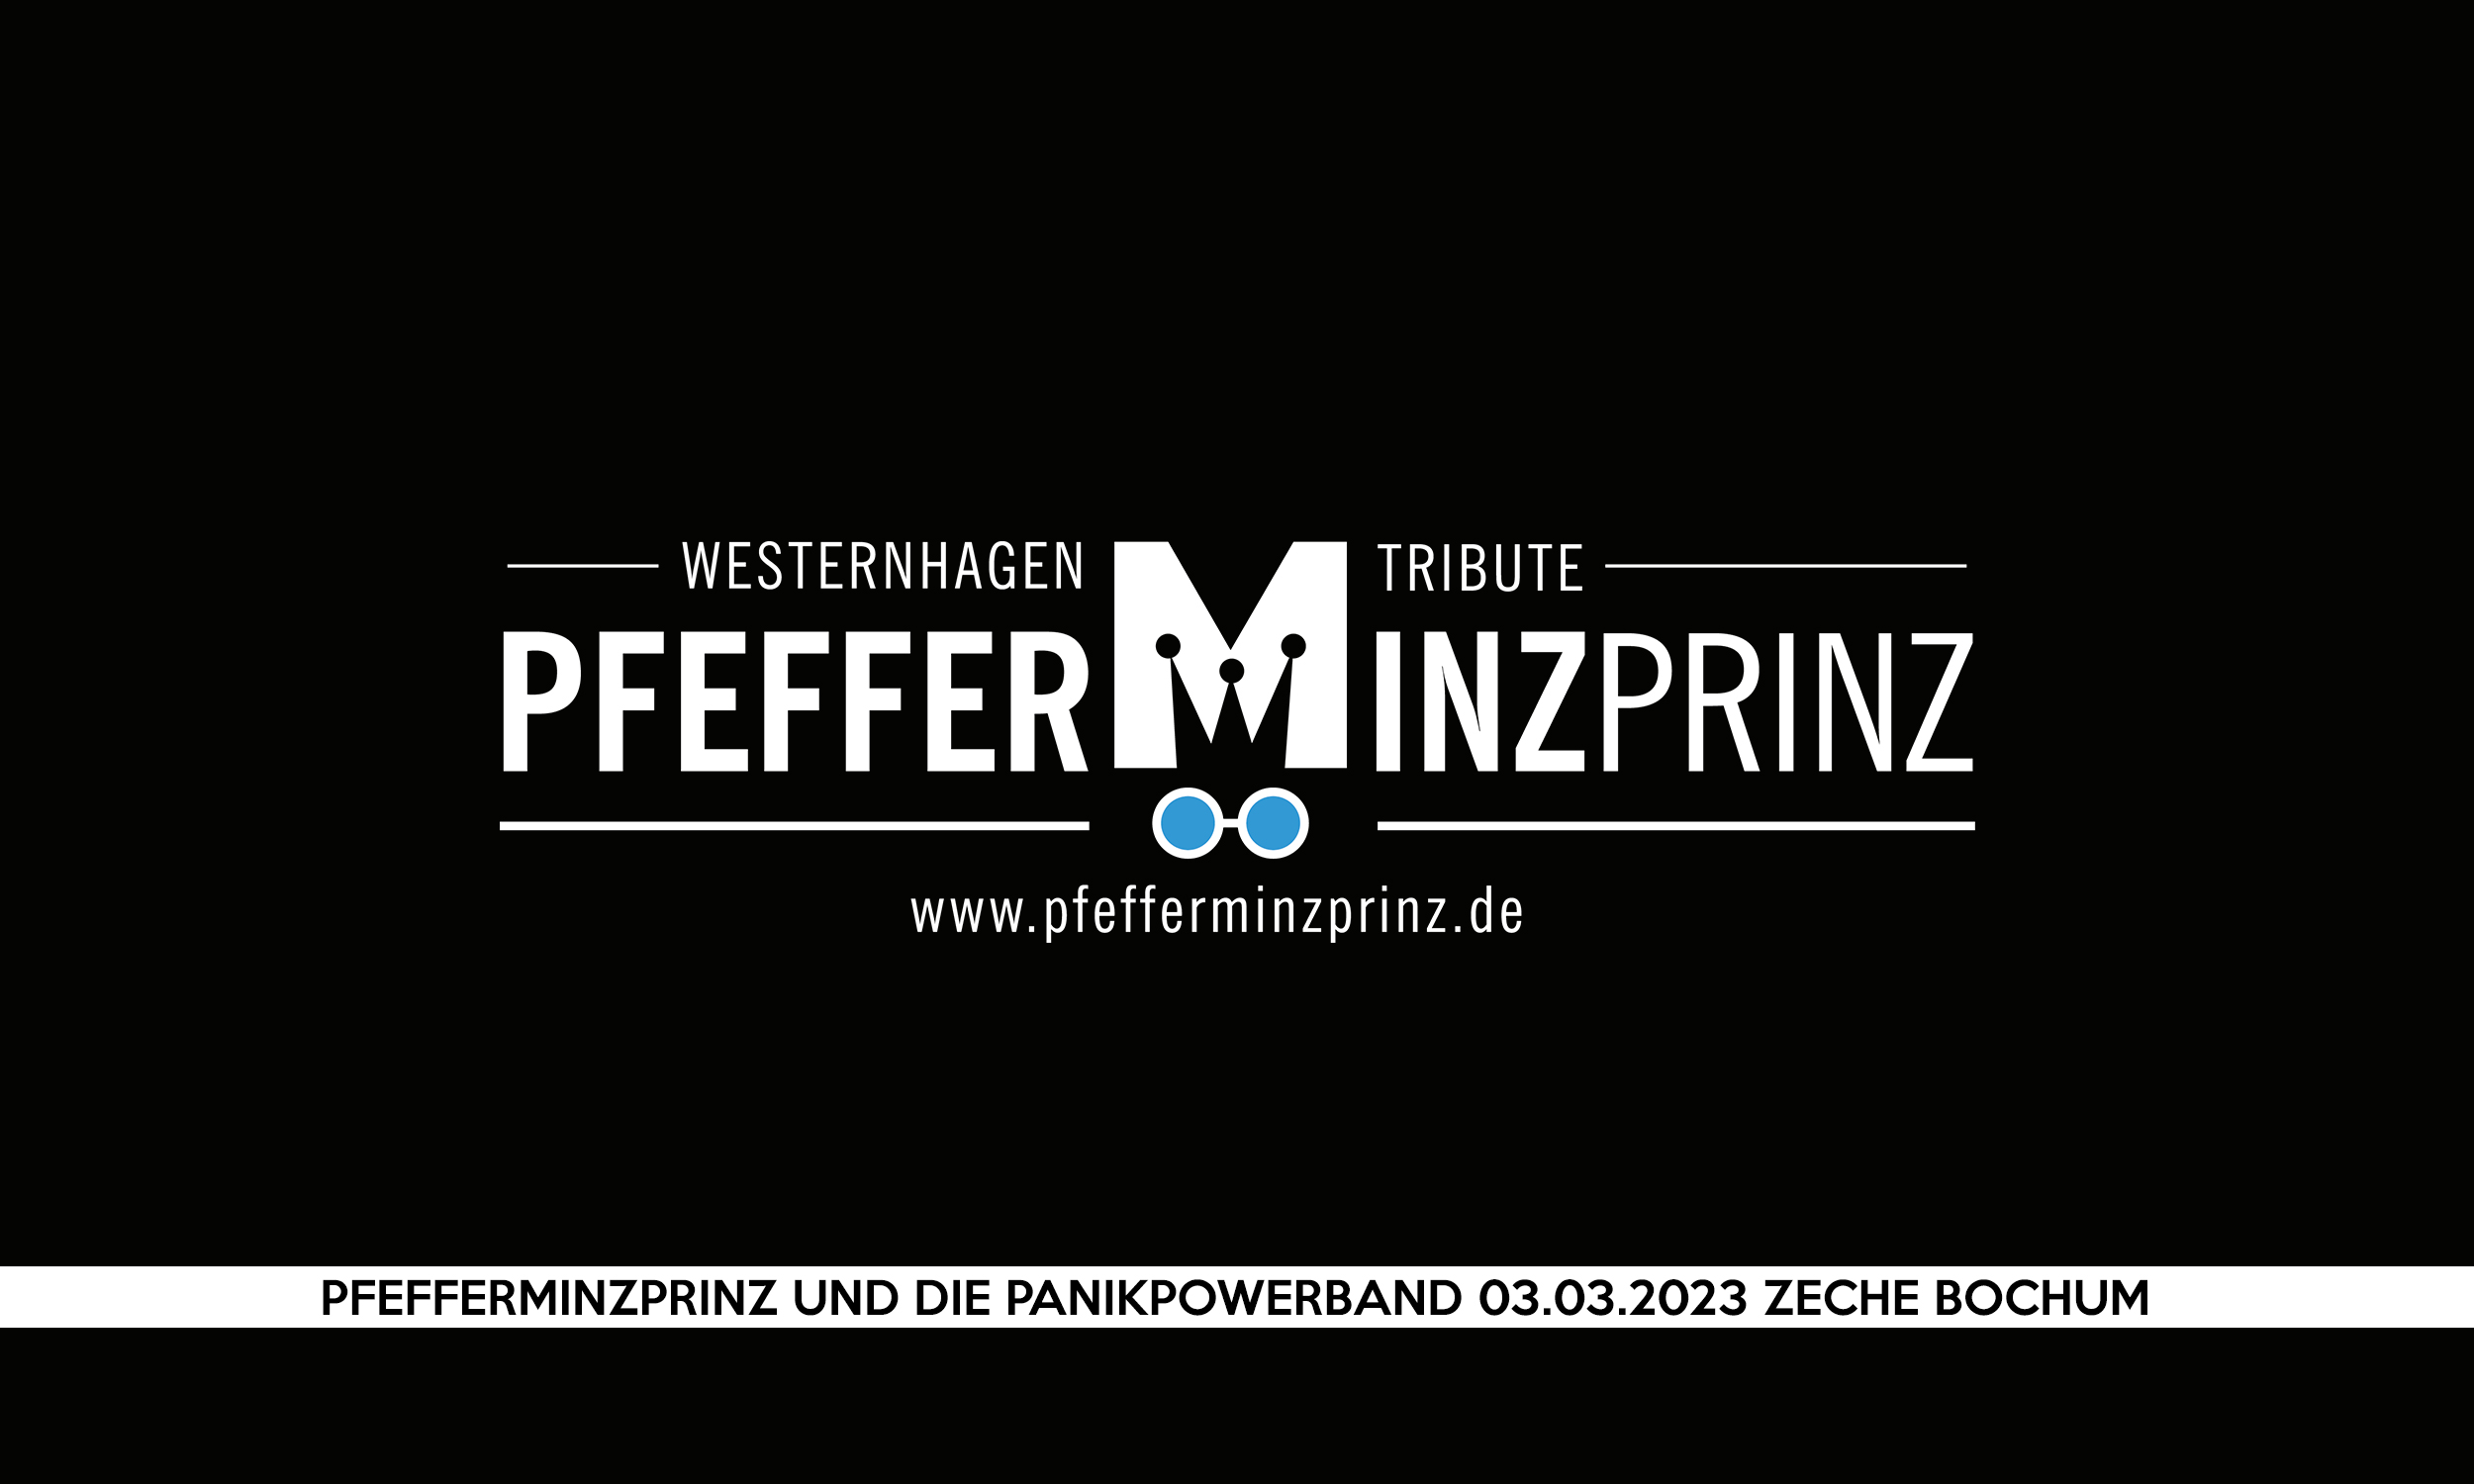 Pfefferminzprinz & Panik Power Band - Tribute to Westernhagen & Lindenberg